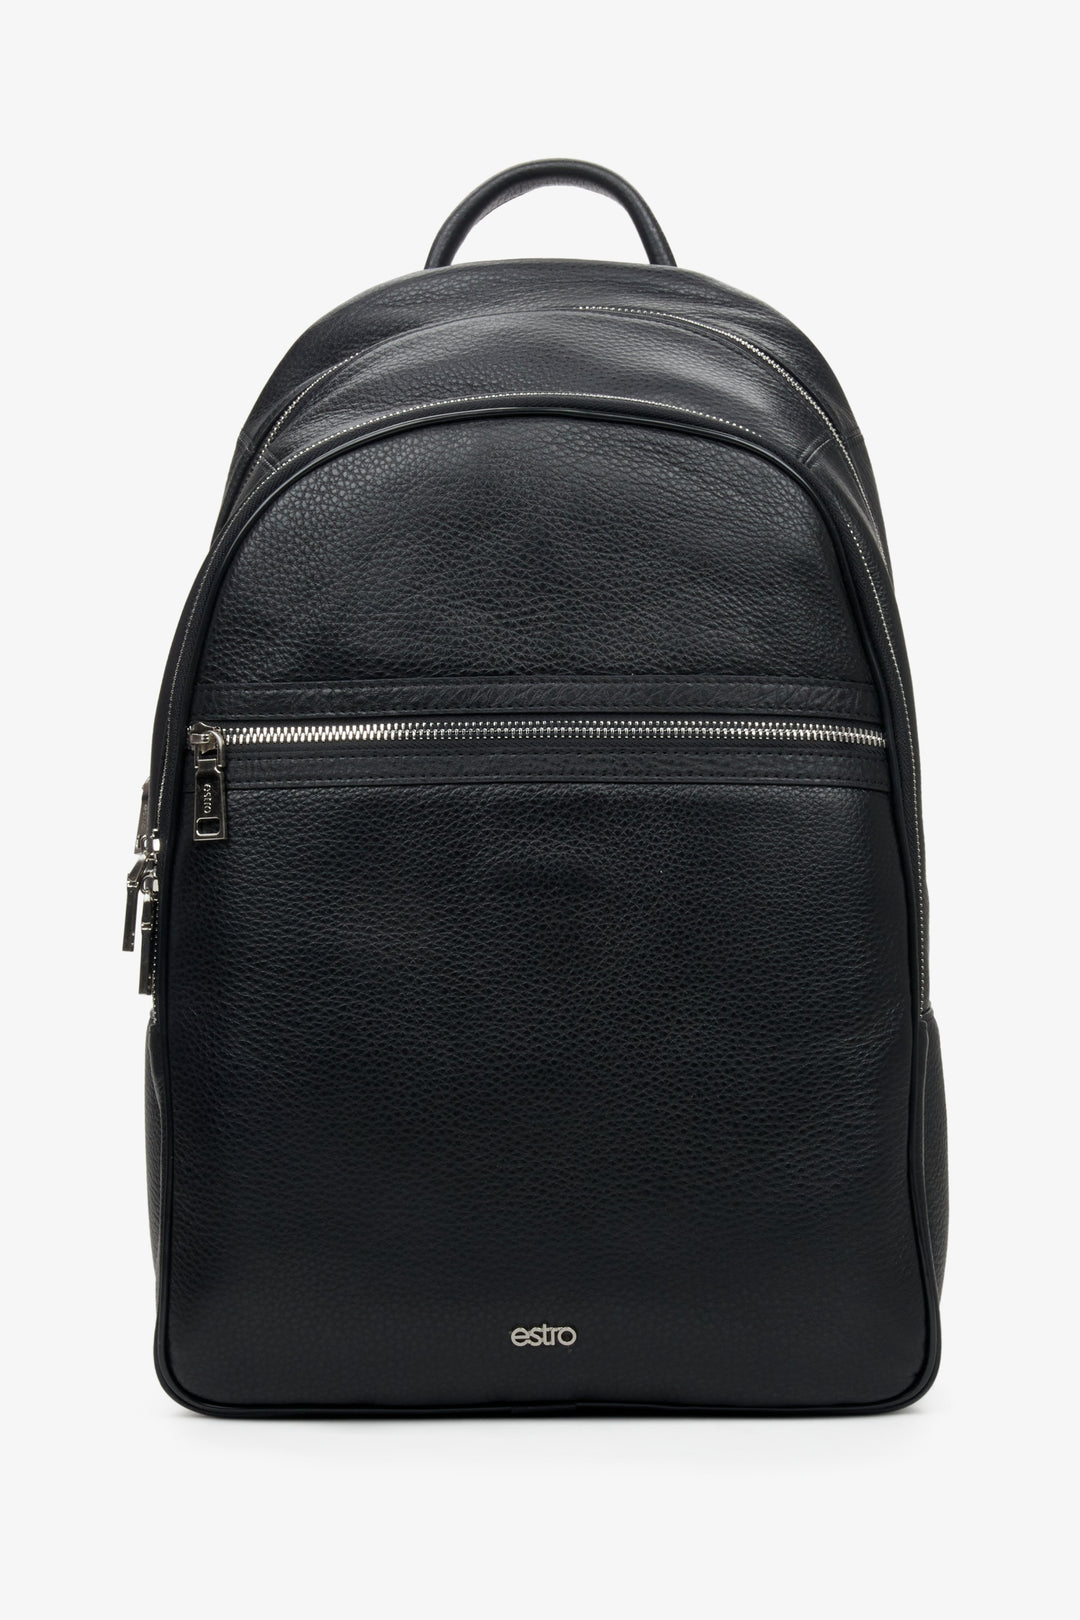 Men's black leather backpack by Estro.